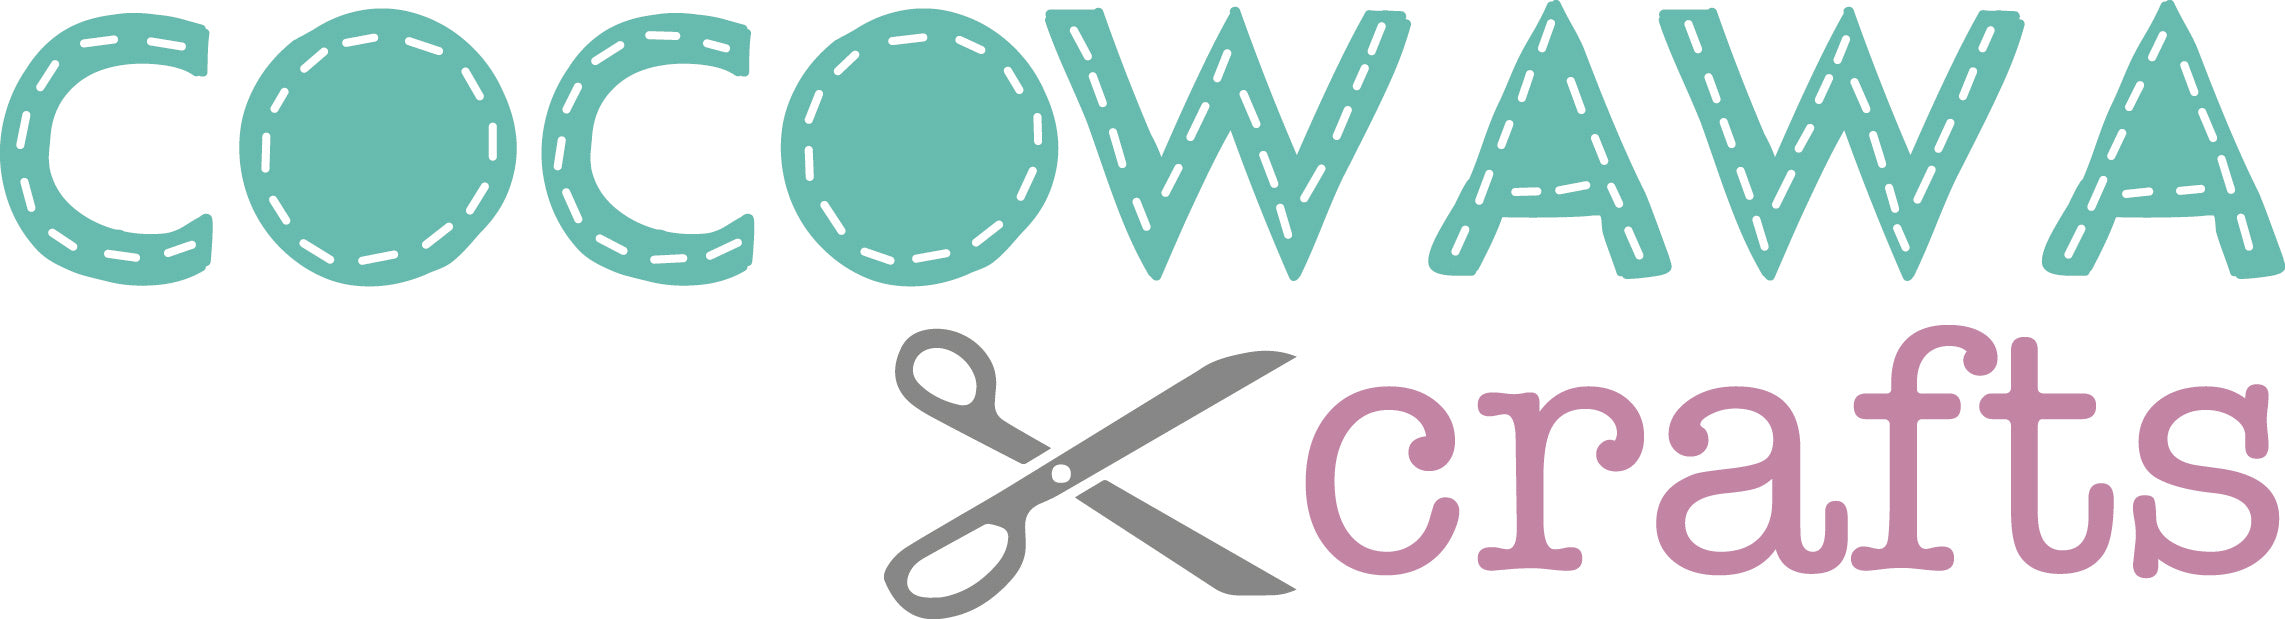 CocoWawa Crafts